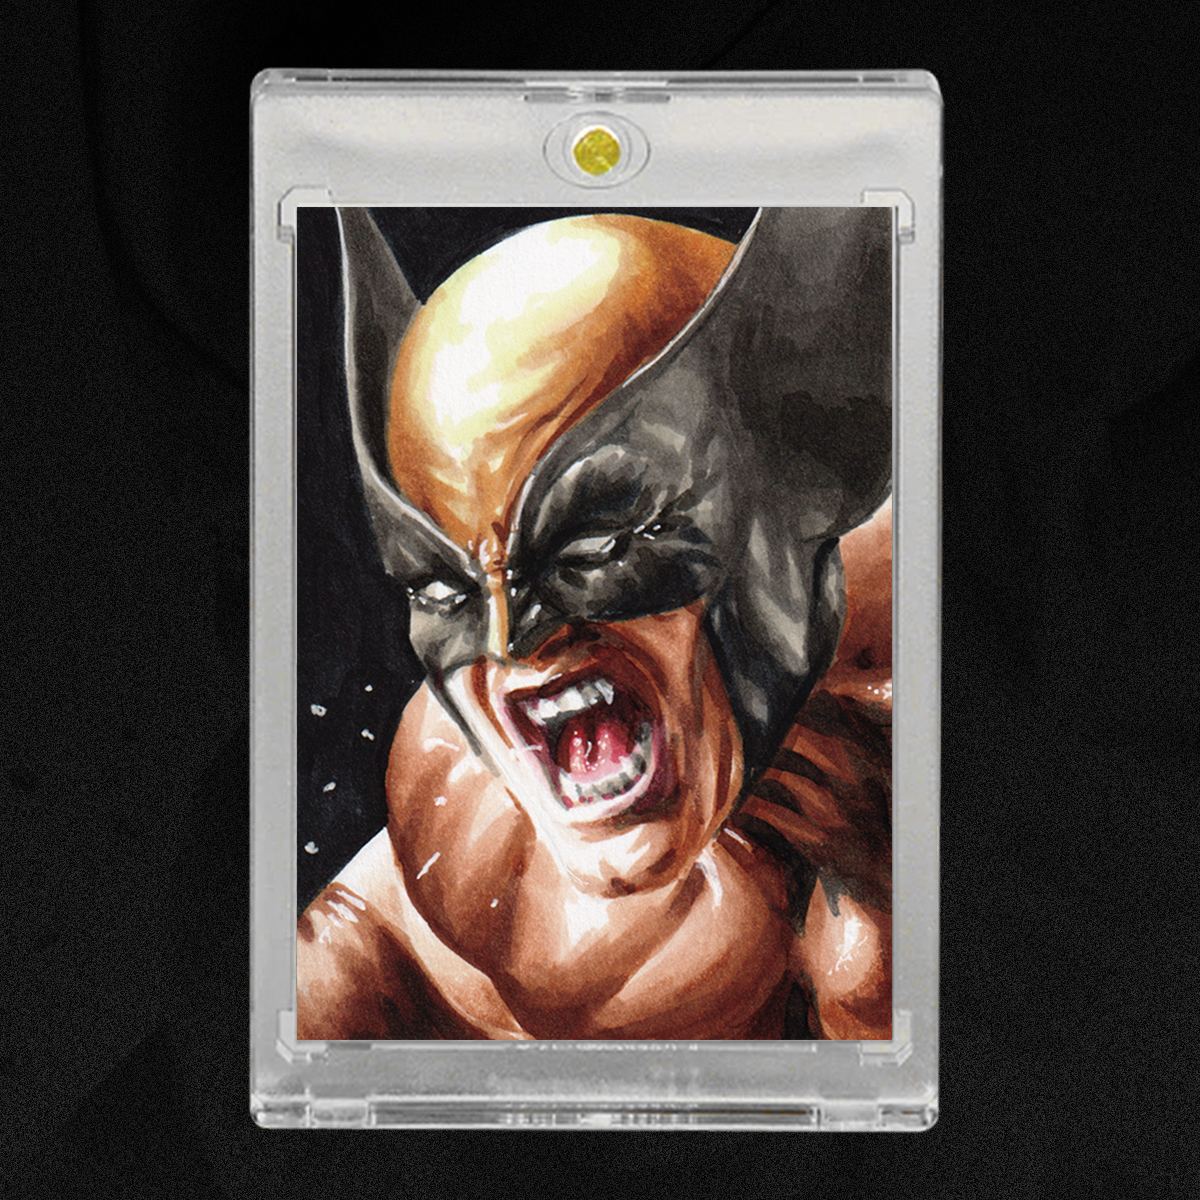 Wolverine Sketch Card by Duke